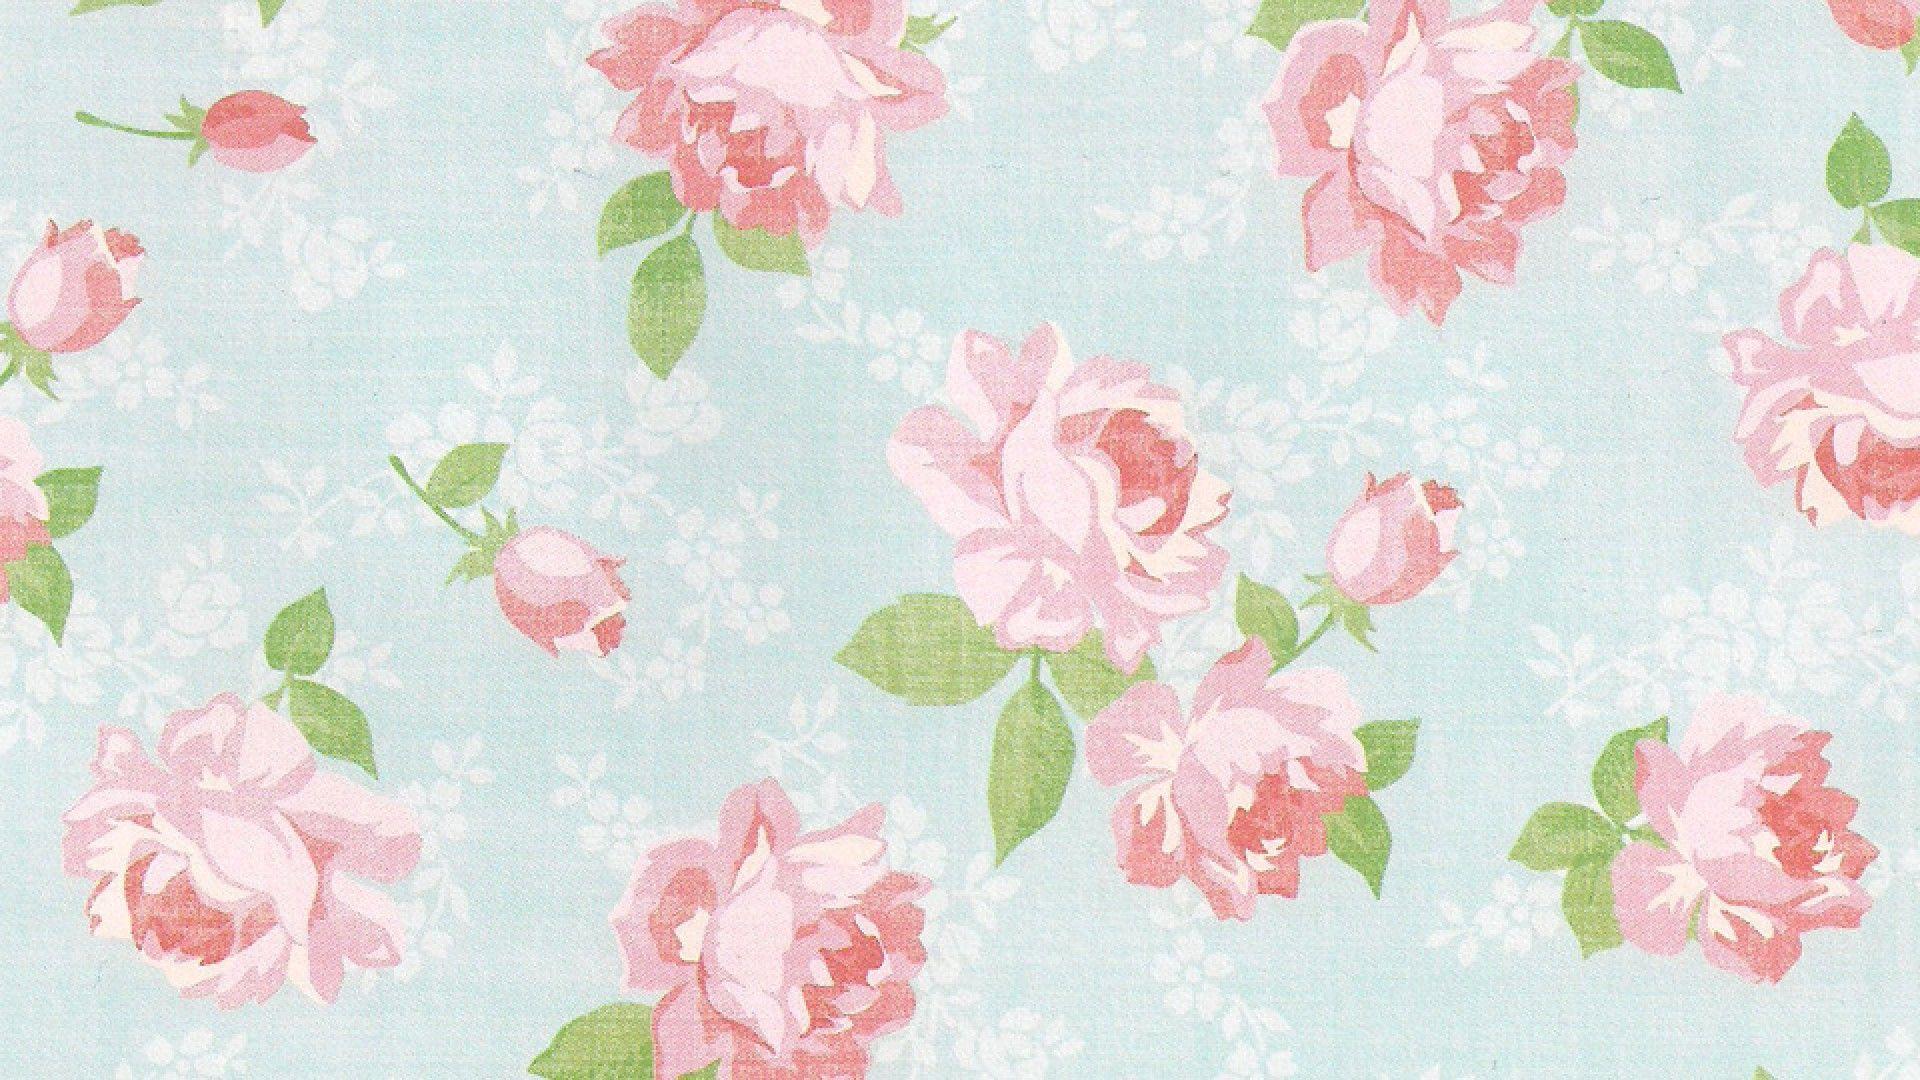 Wallpaper.wiki Vintage Flower Background Download PIC WPD006686